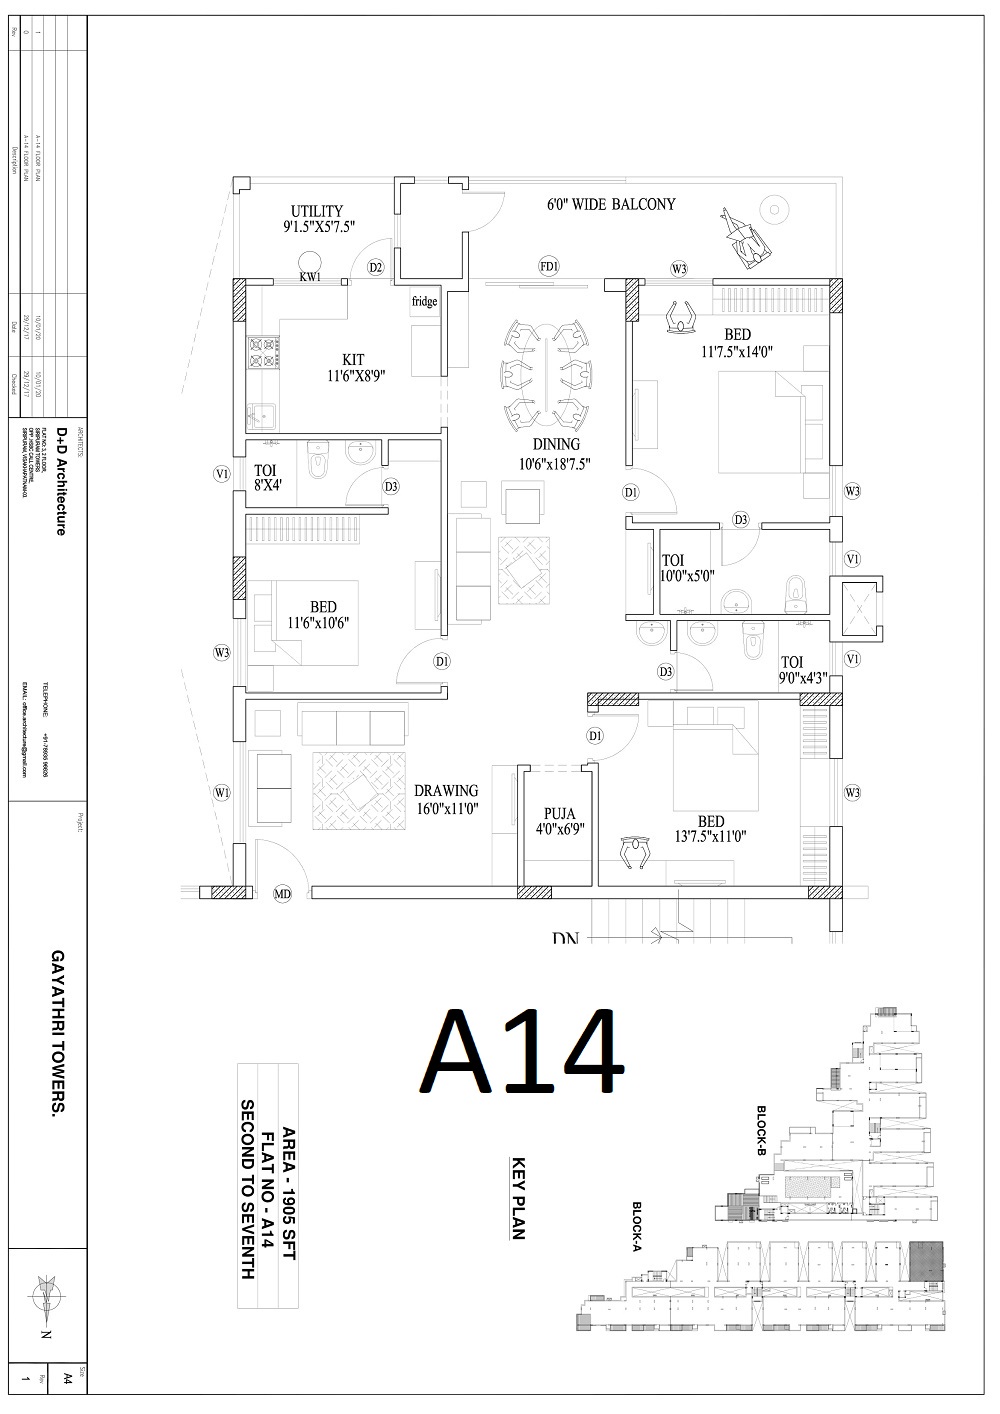 A14 - Tipcal Floor Plan